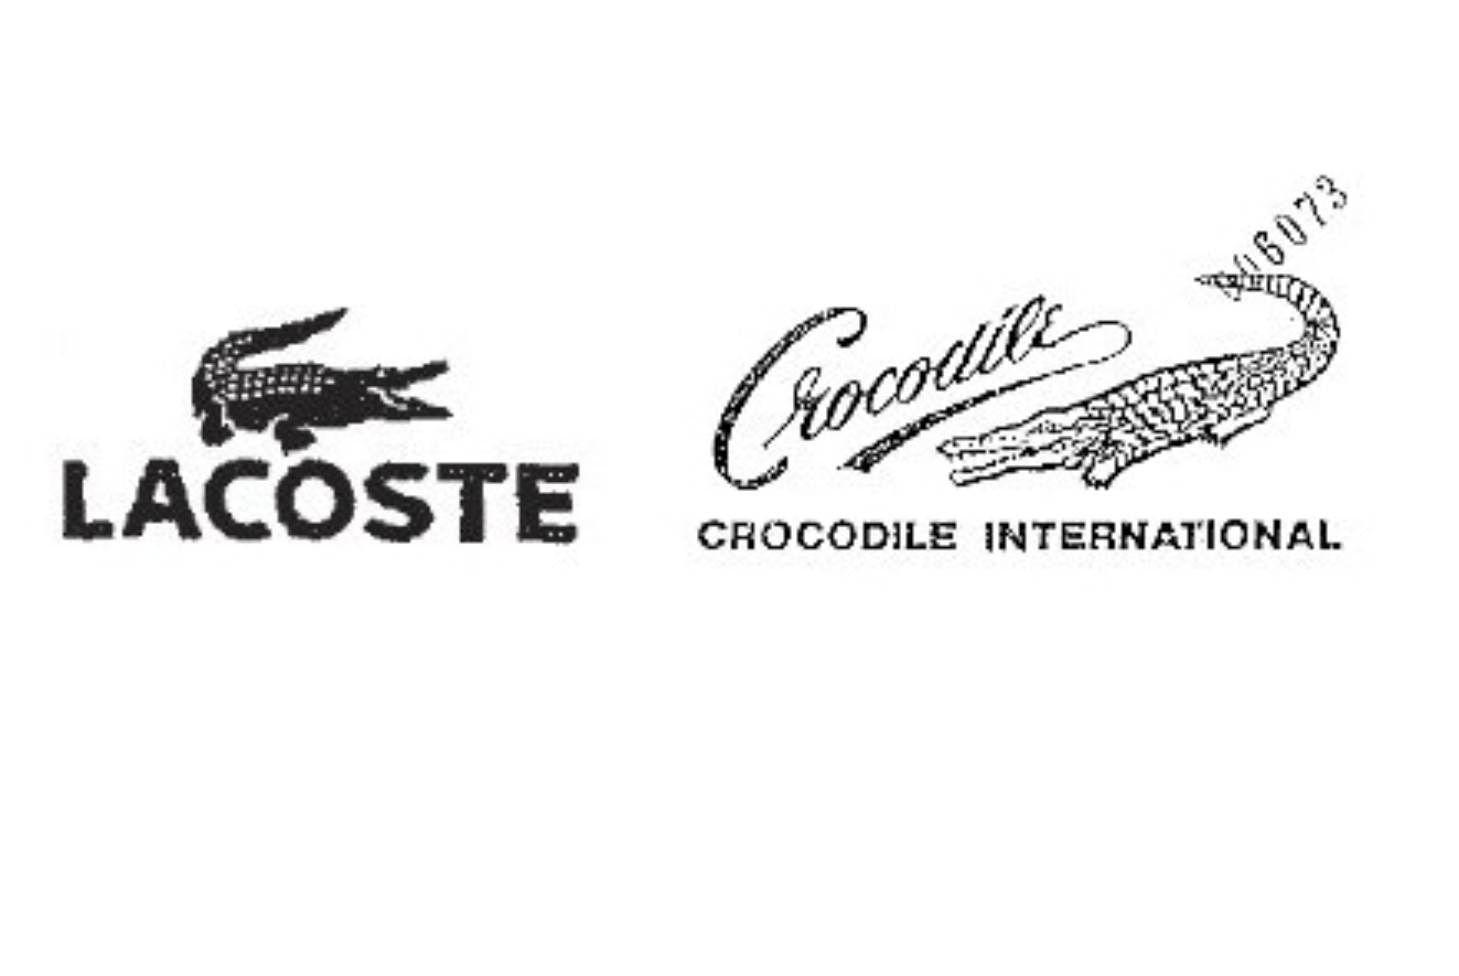 Crocodile Fashion Logo - Clothing war between Lacoste and Crocodile International escalated ...